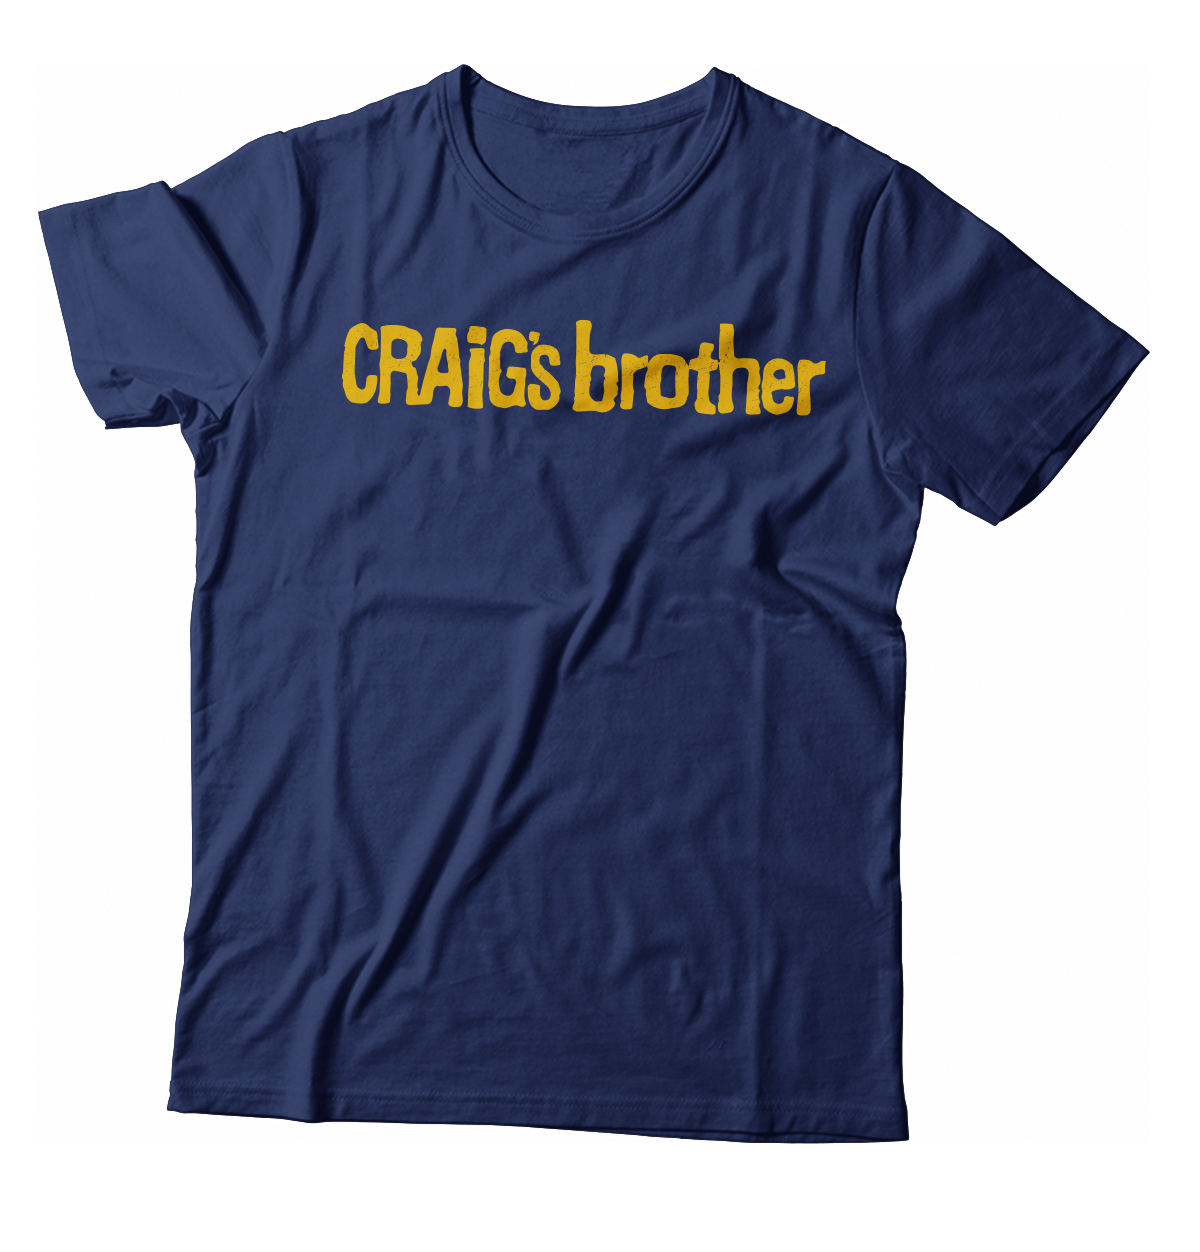 CRAIG'S BROTHER - "Logo" (Navy) (T-Shirt)